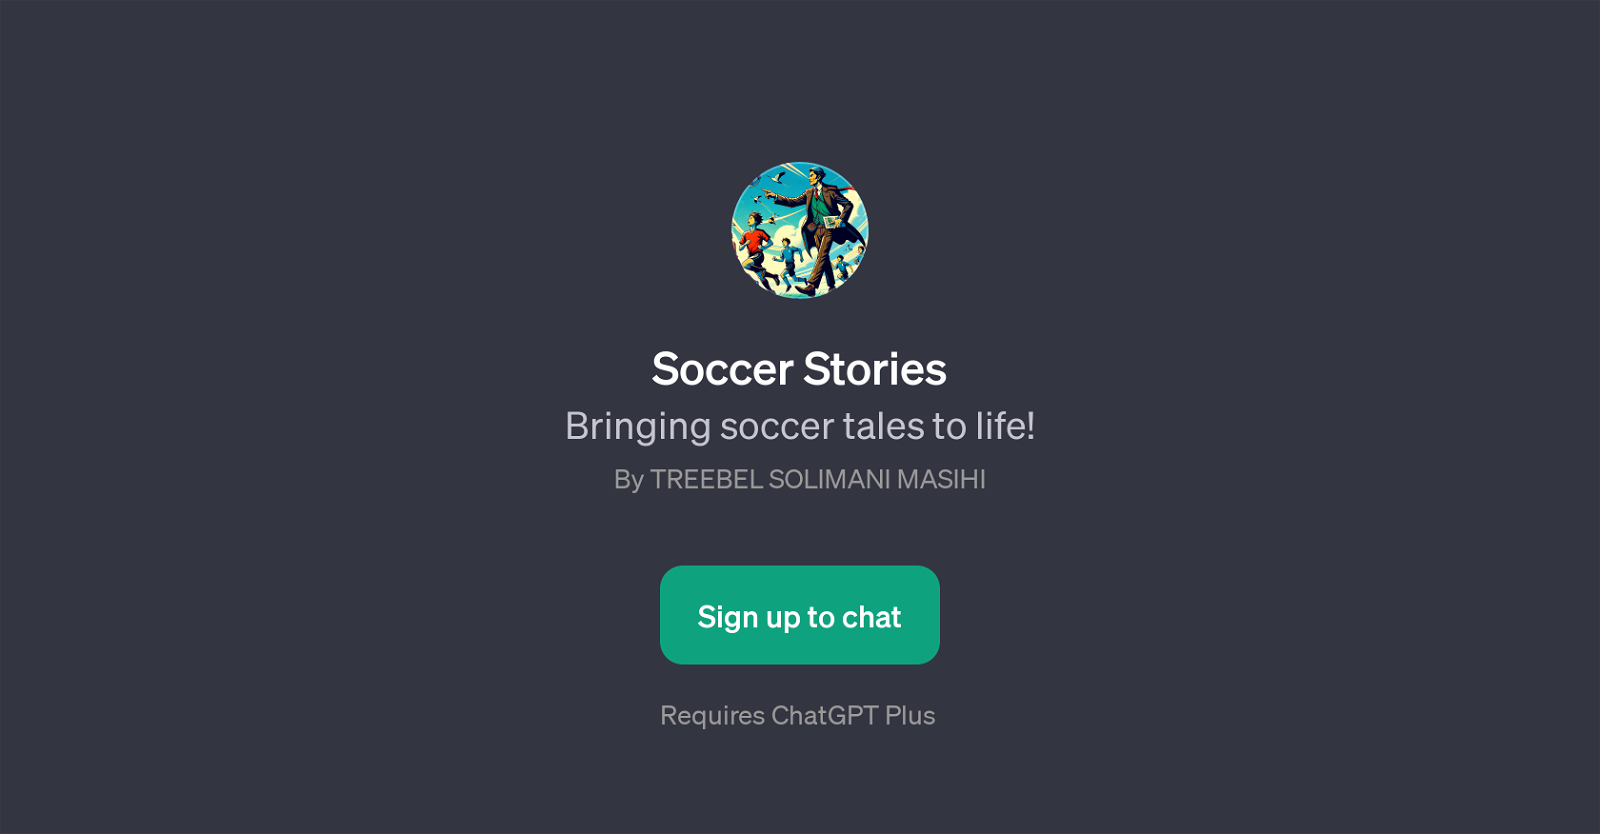 Soccer Stories website